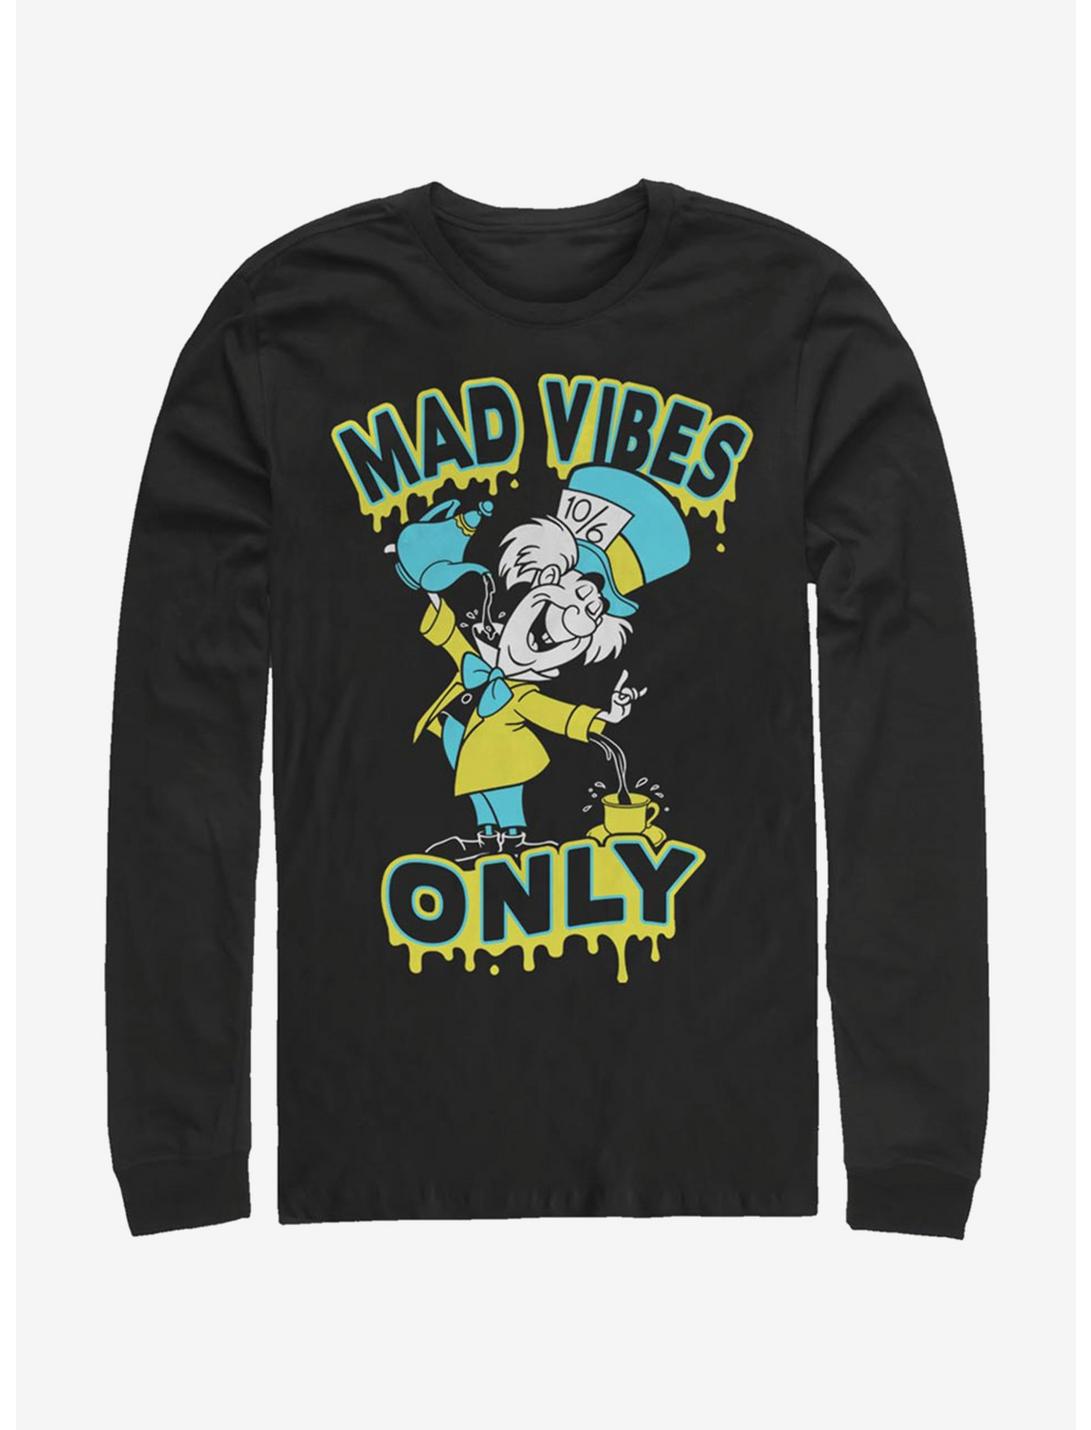 Disney Alice In Wonderland Spill It Hatter Long-Sleeve T-Shirt, BLACK, hi-res